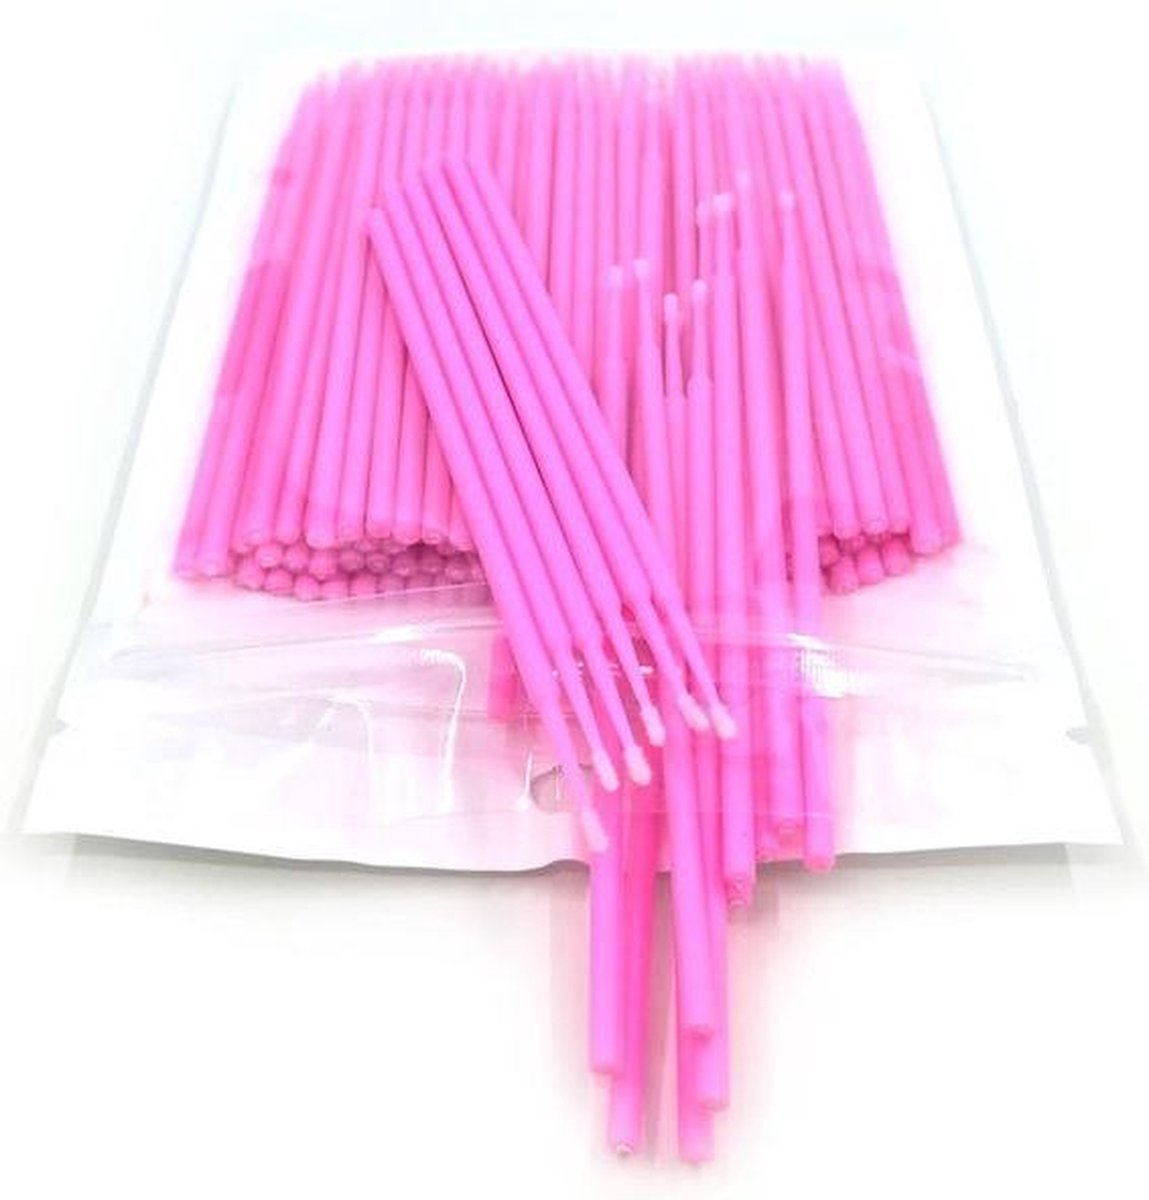 Wegwerp micro borstel - Roze - 100 stuks – Make-up wimper borsteltjes